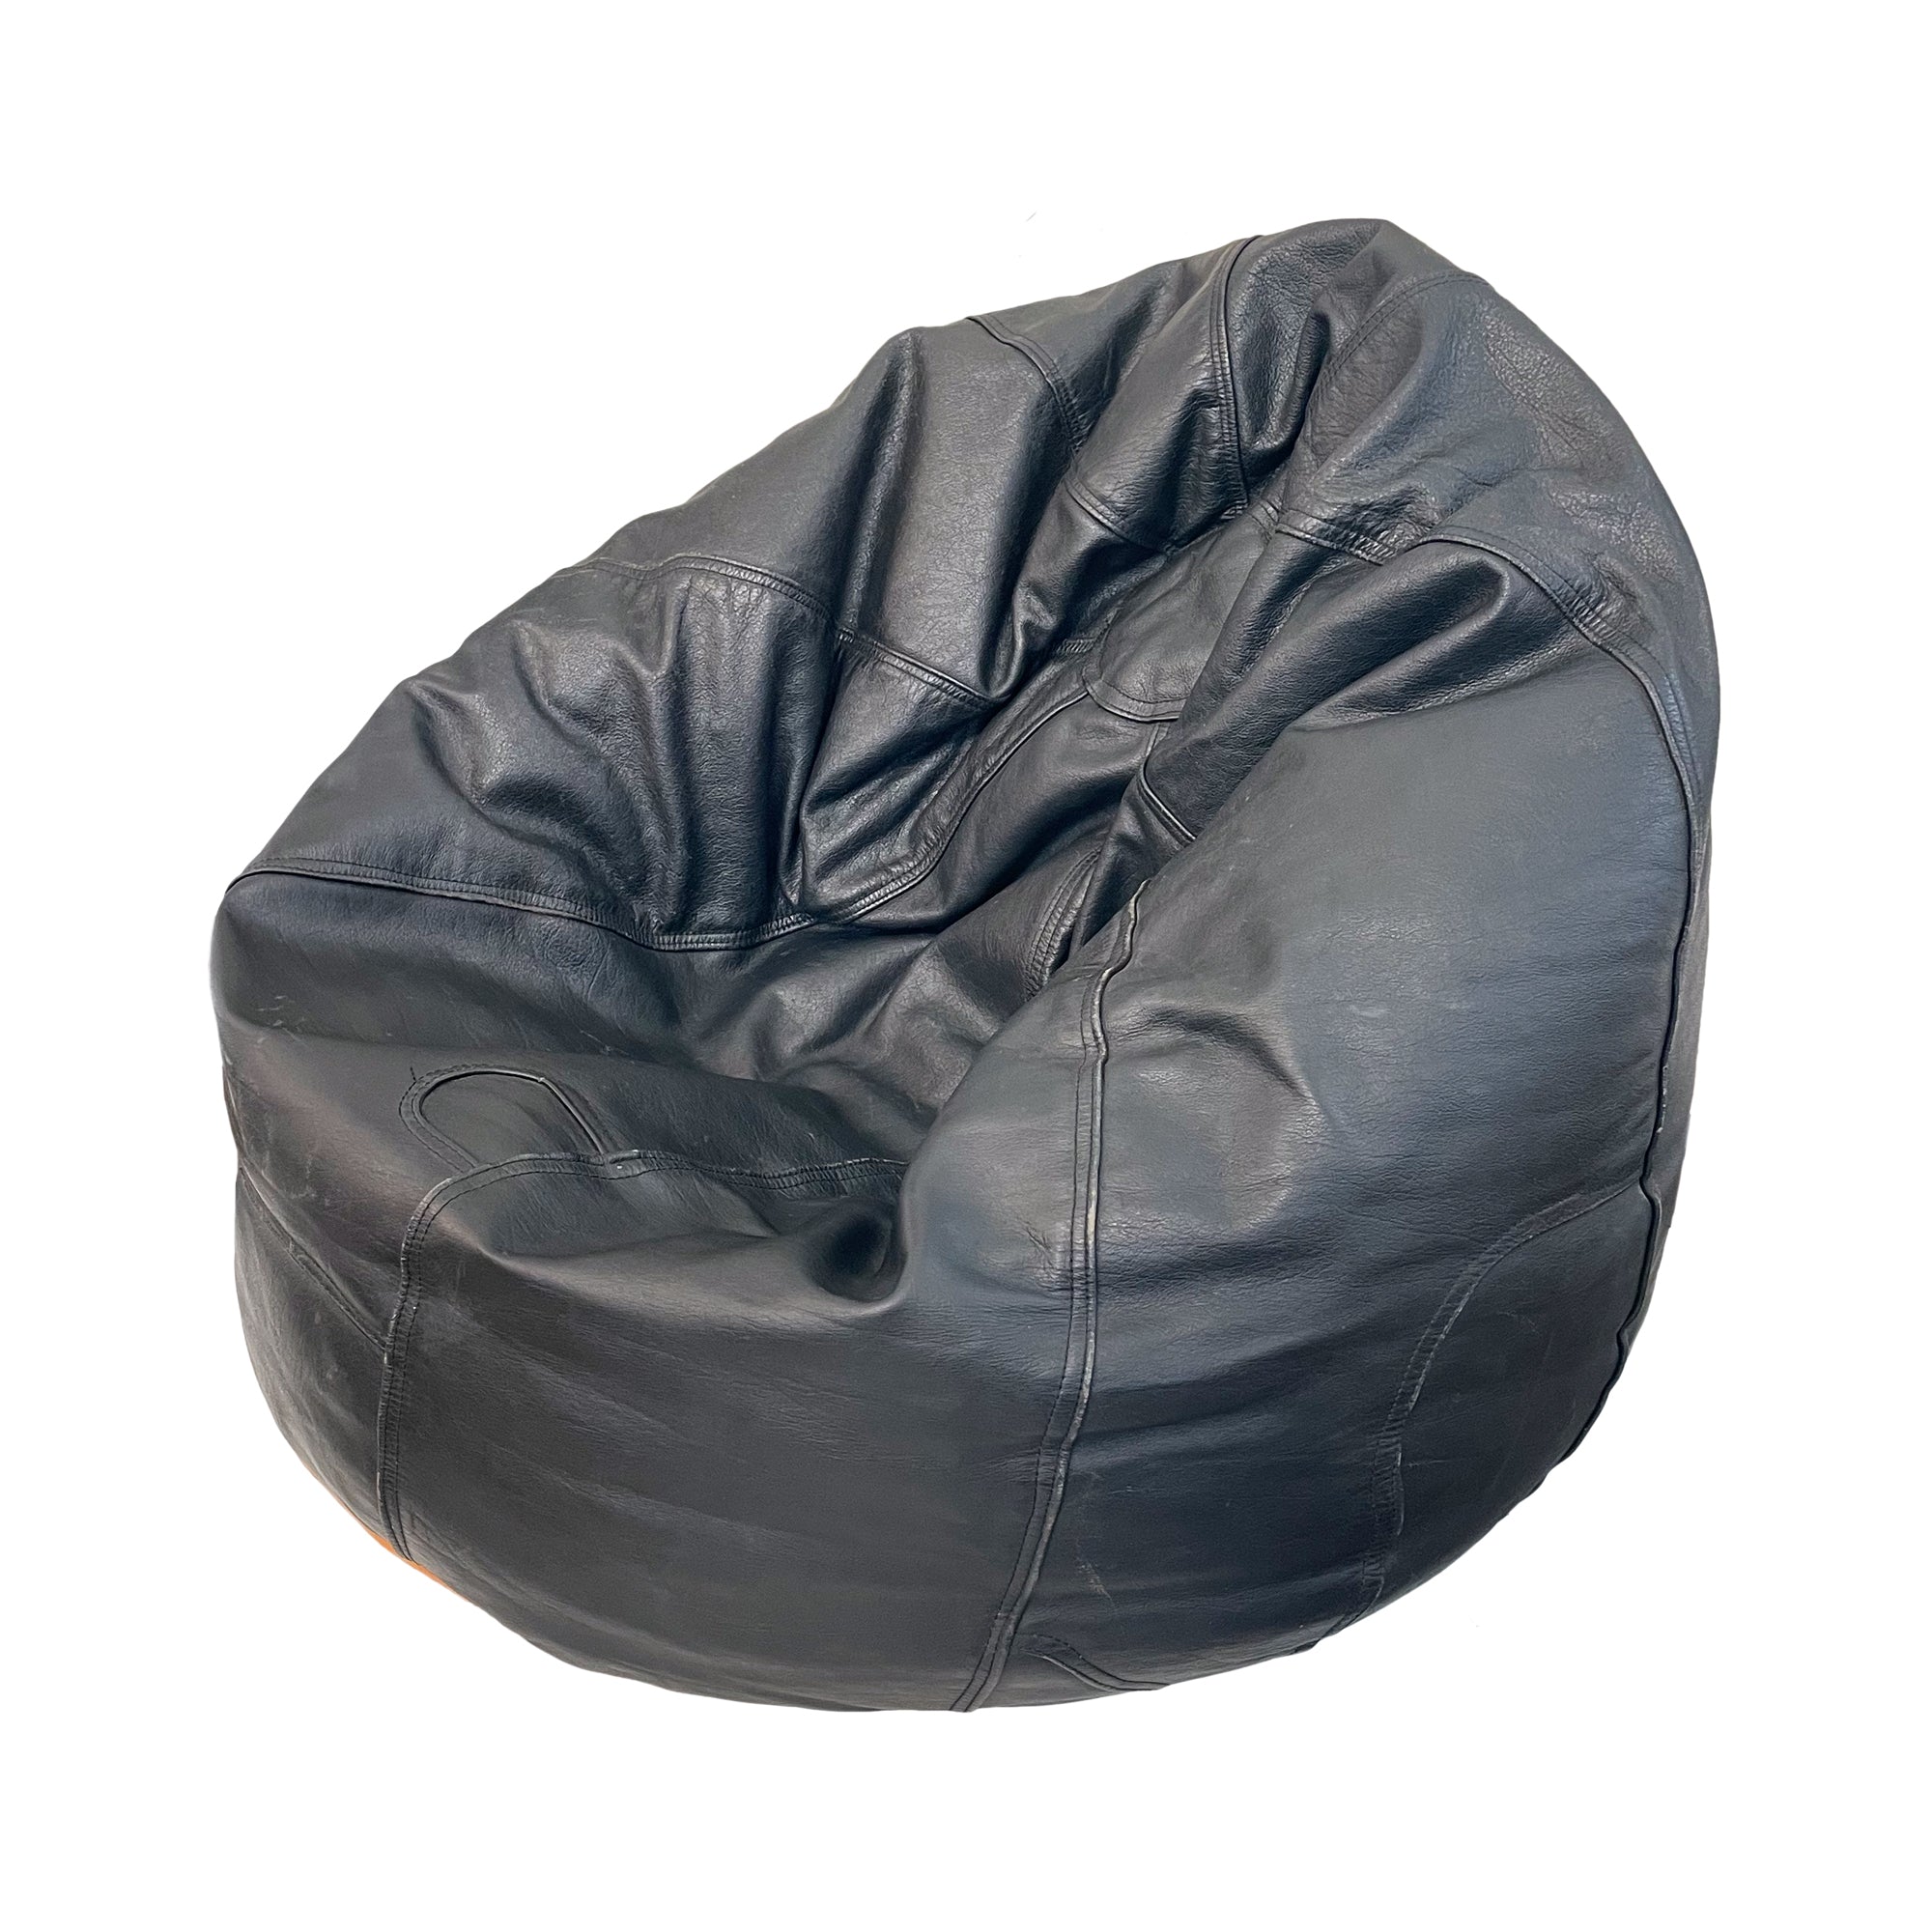 Midcentury Leather Bean Bag Chair